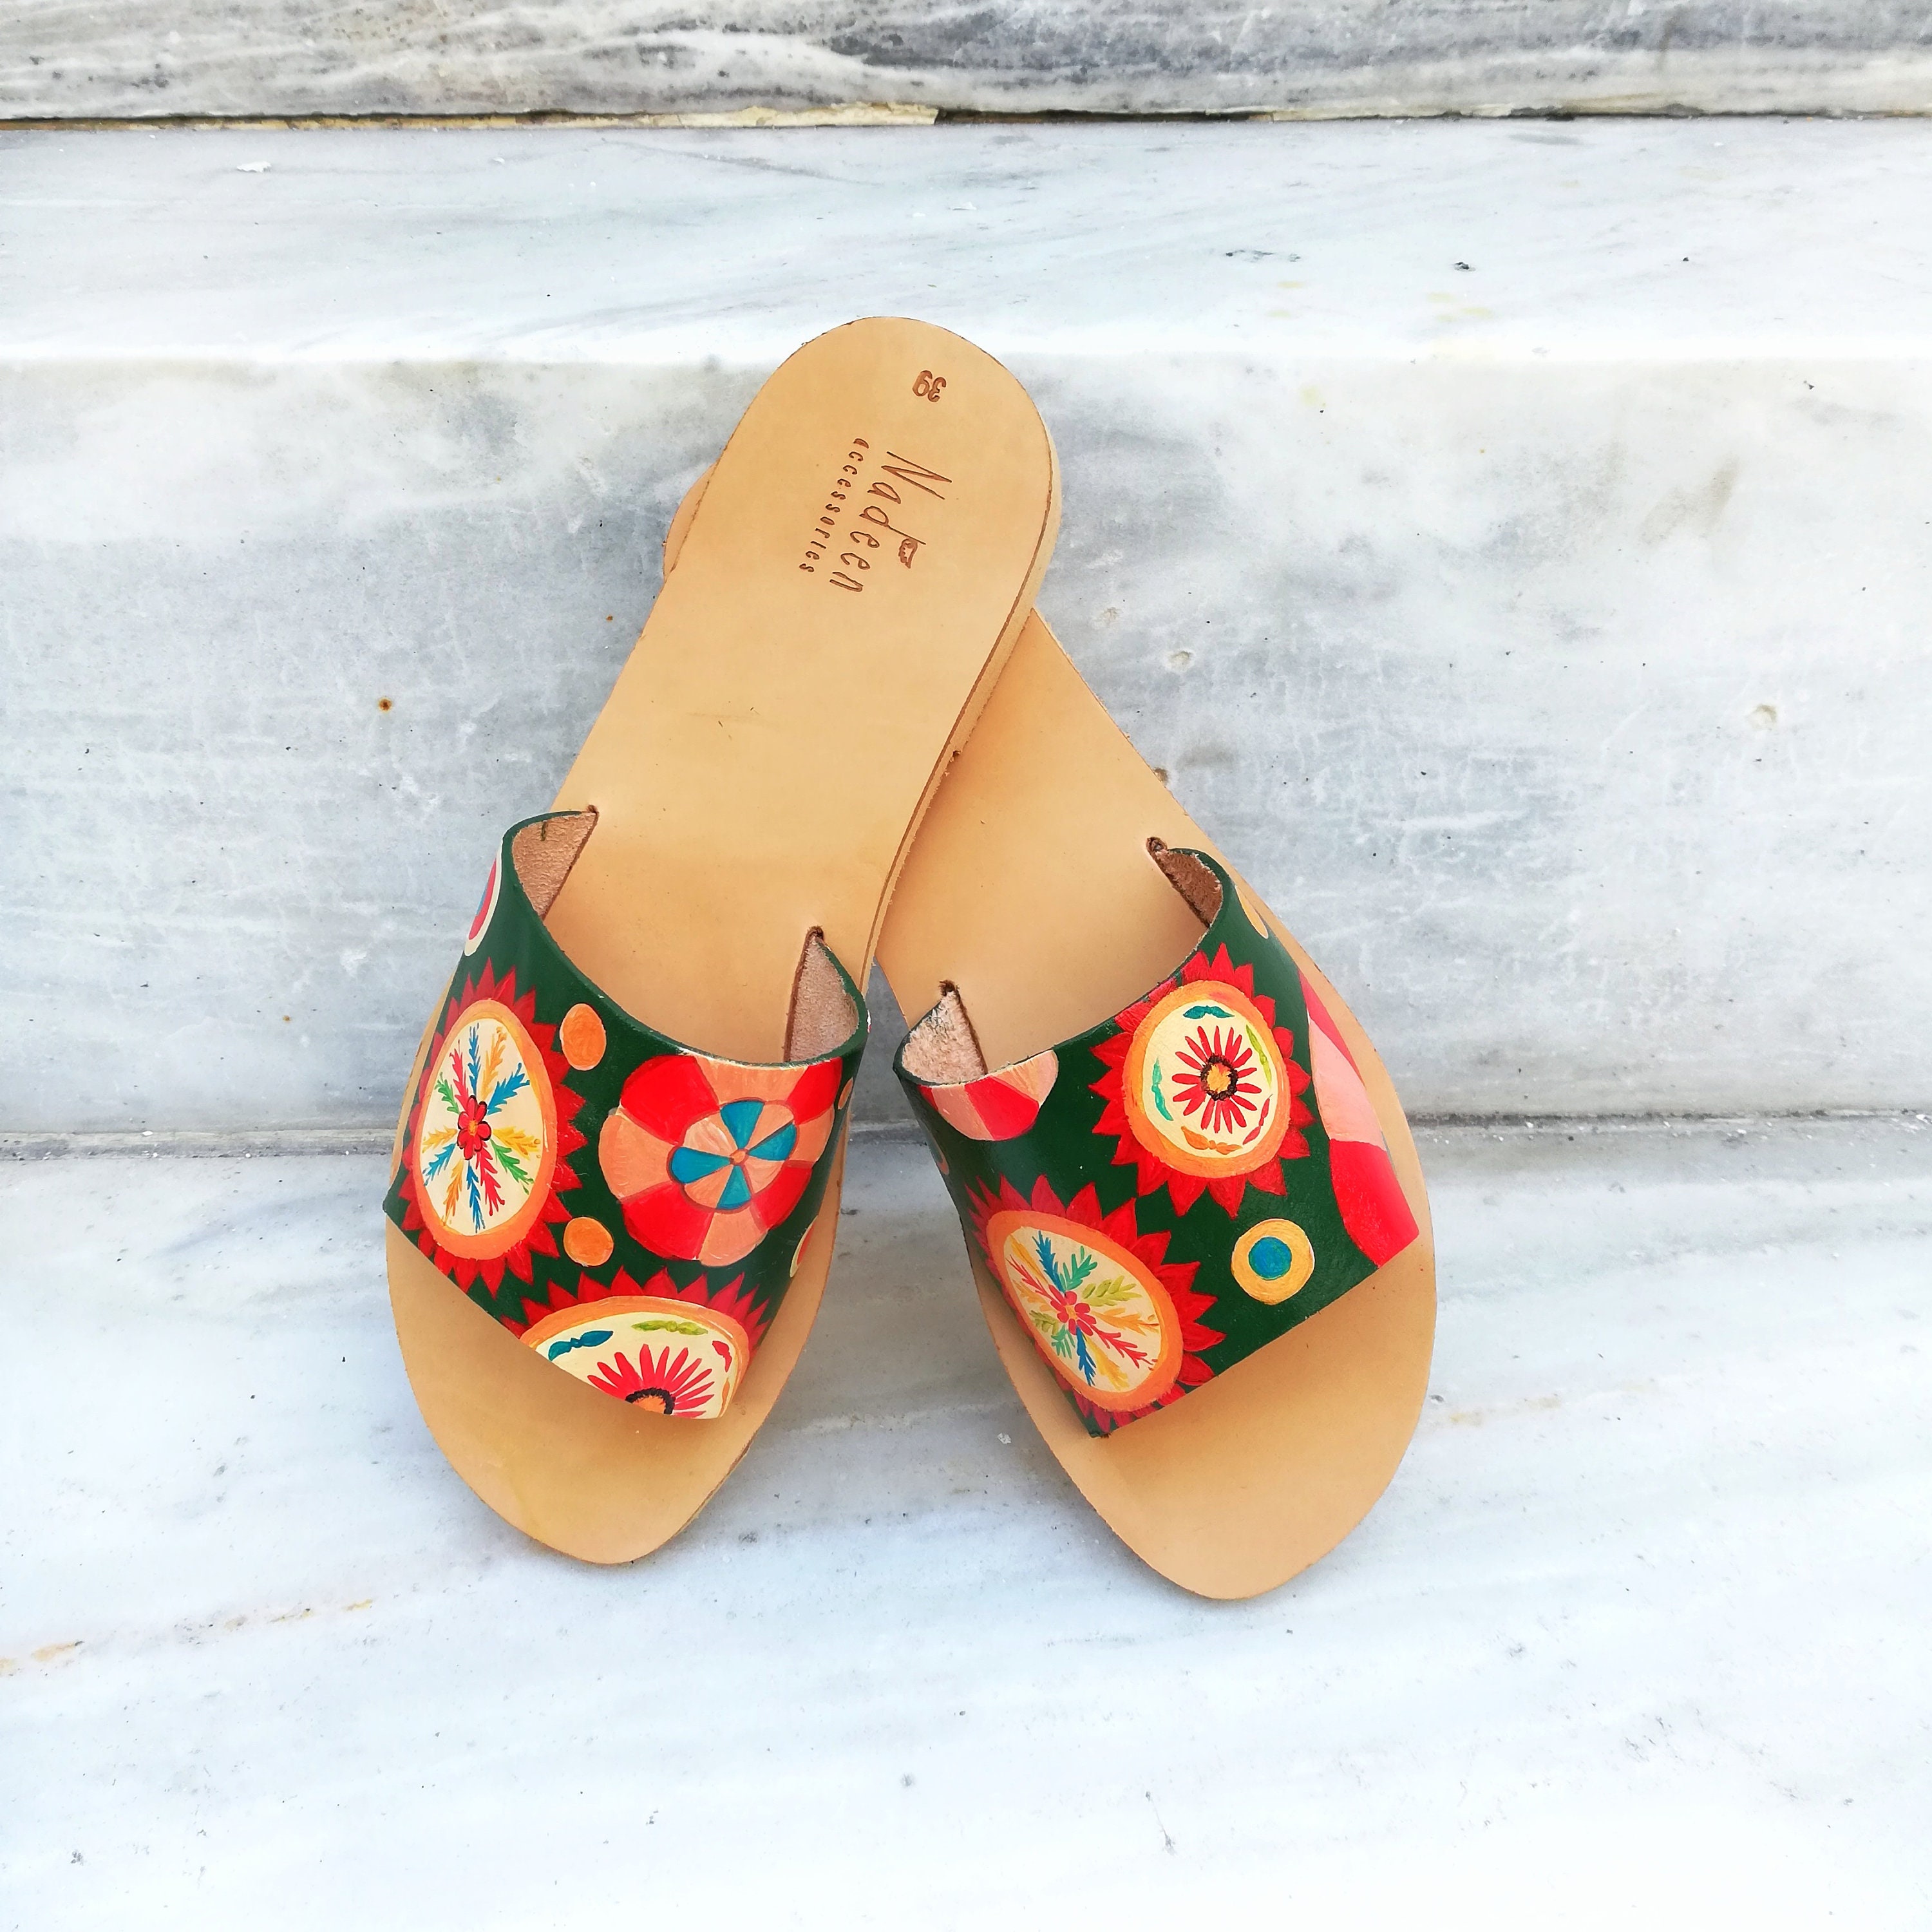 Flower sandals leather sandals floral sandals handpainted | Etsy